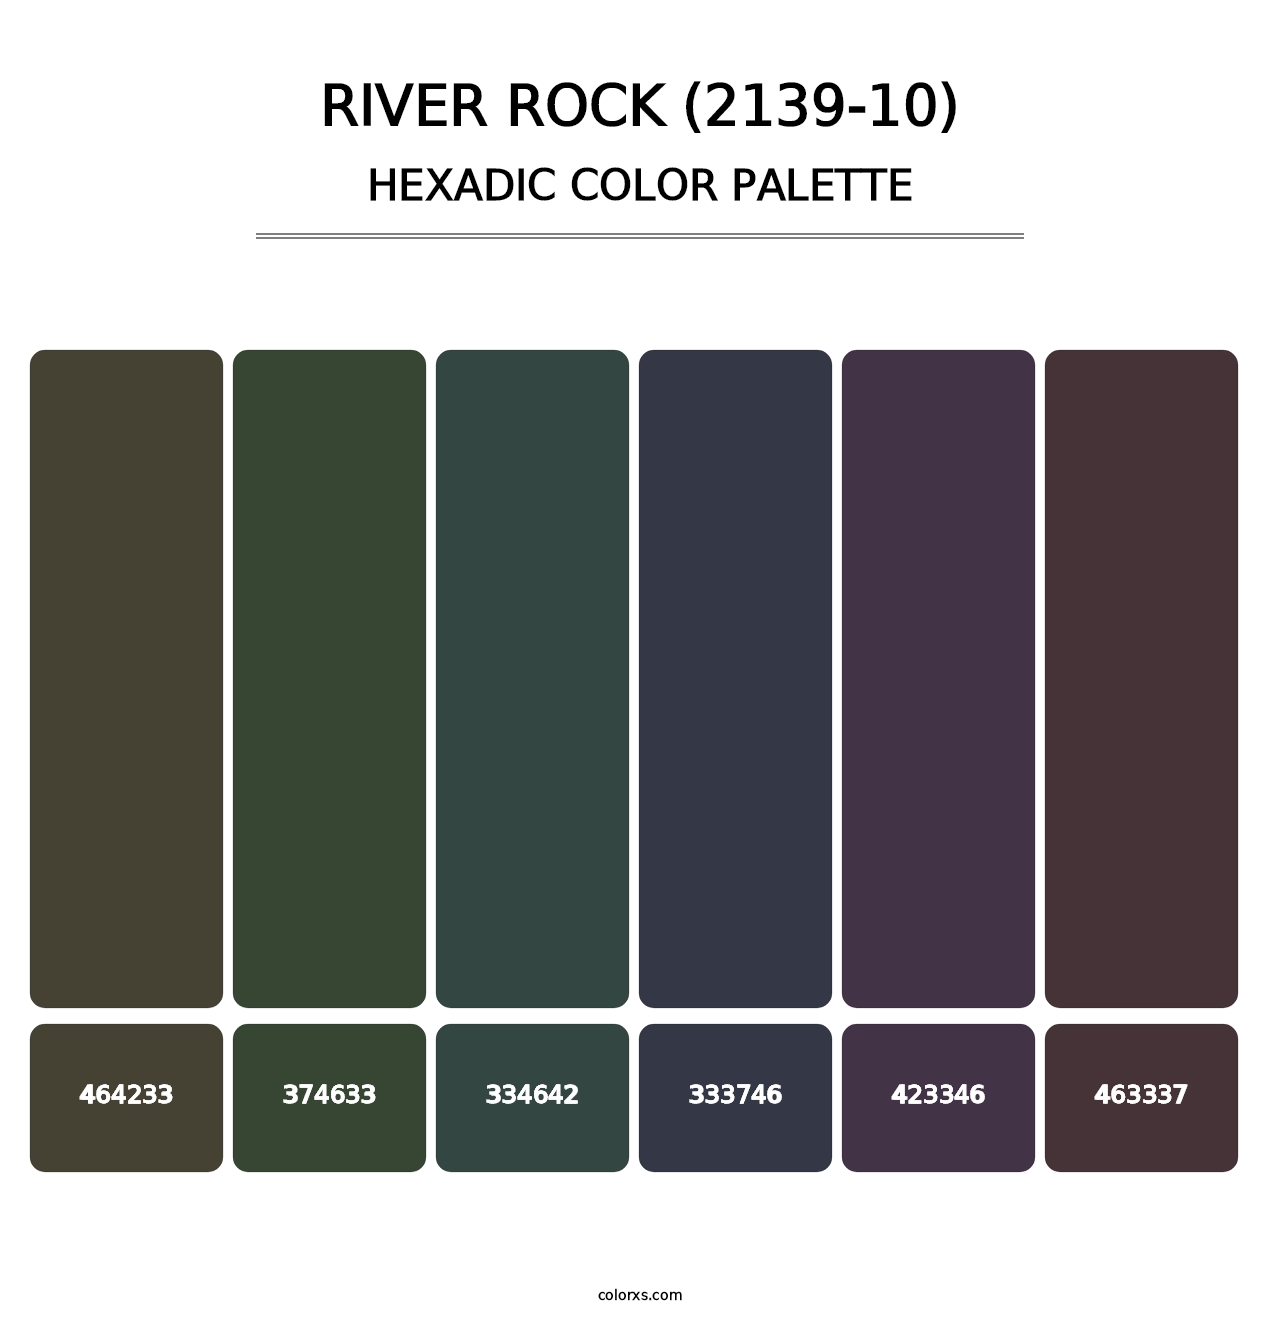 River Rock (2139-10) - Hexadic Color Palette